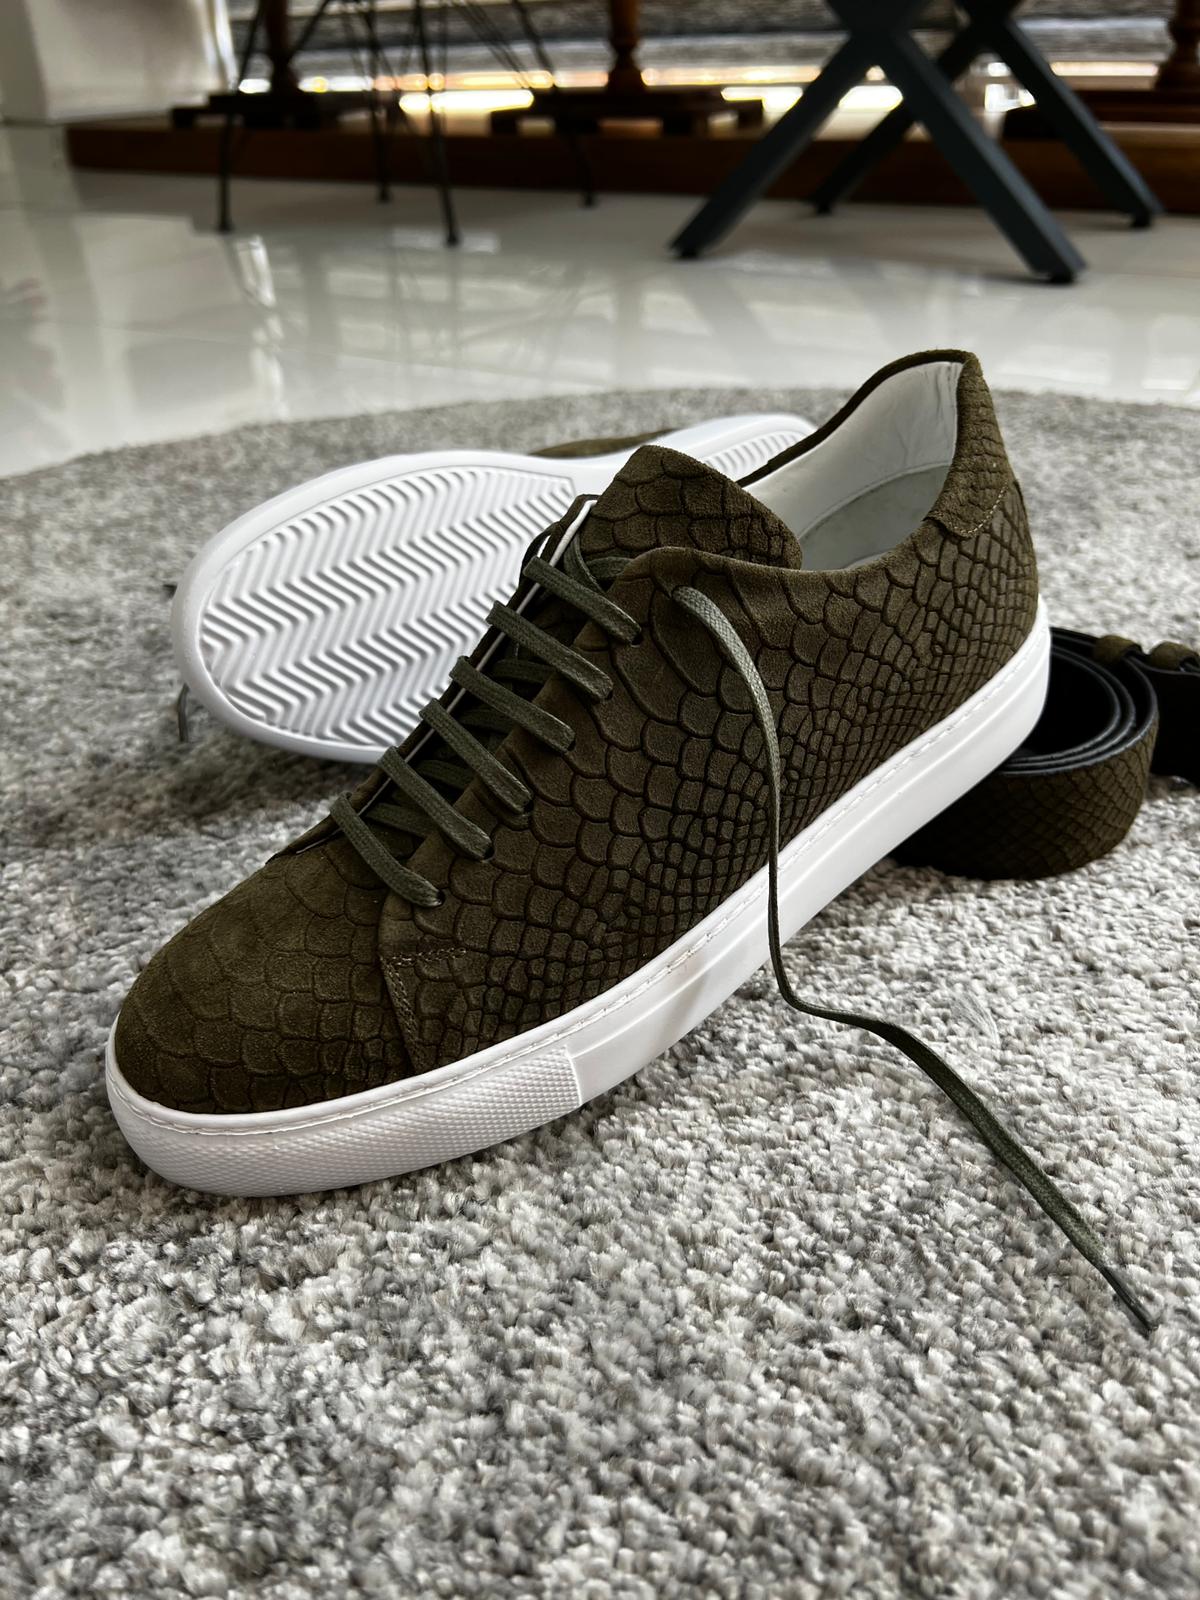 Bojoni Amato Special Edition Rubber Sole Suede Leather Khaki Sneakers